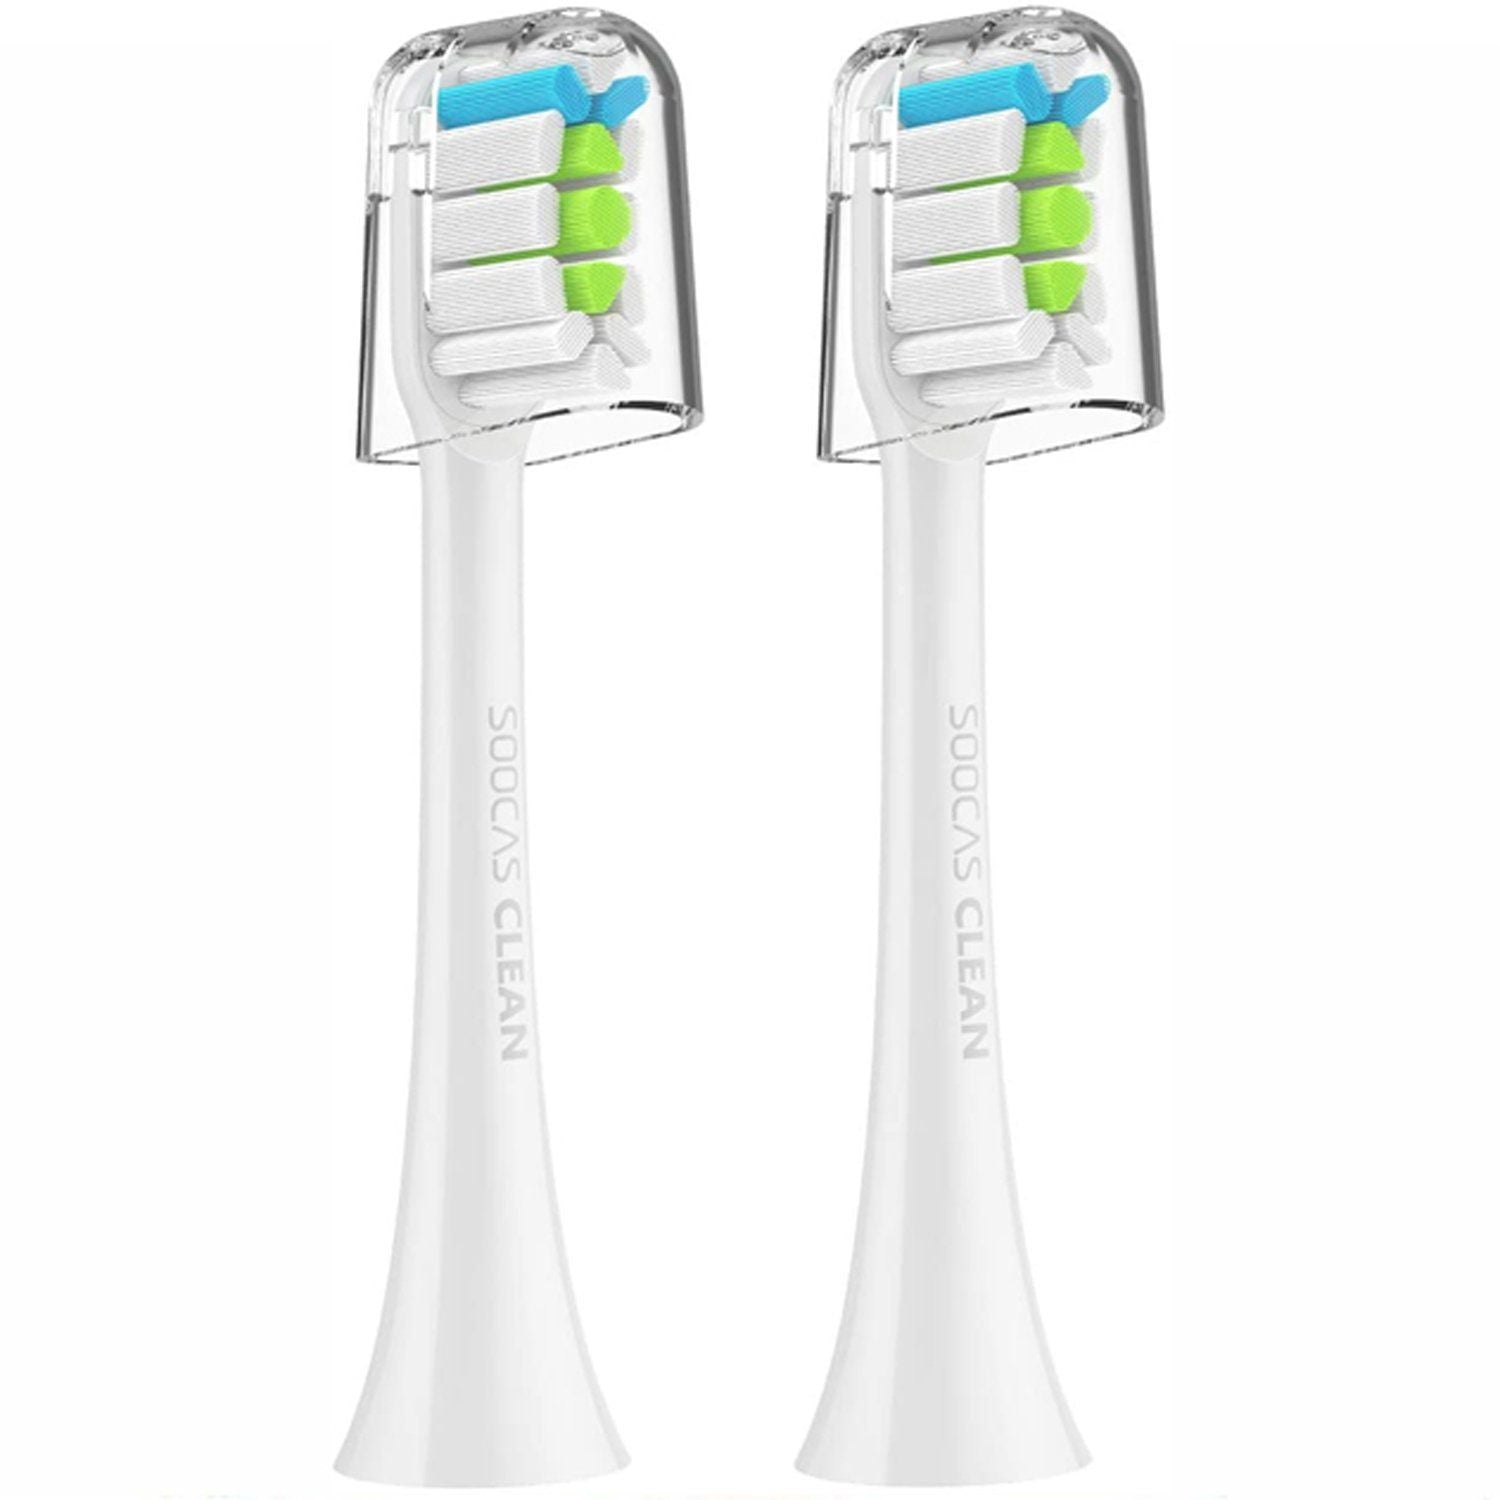 Soocas Original Replacement Toothbrush heads for X1/ X3U/ X5, White Default Soocas Default 